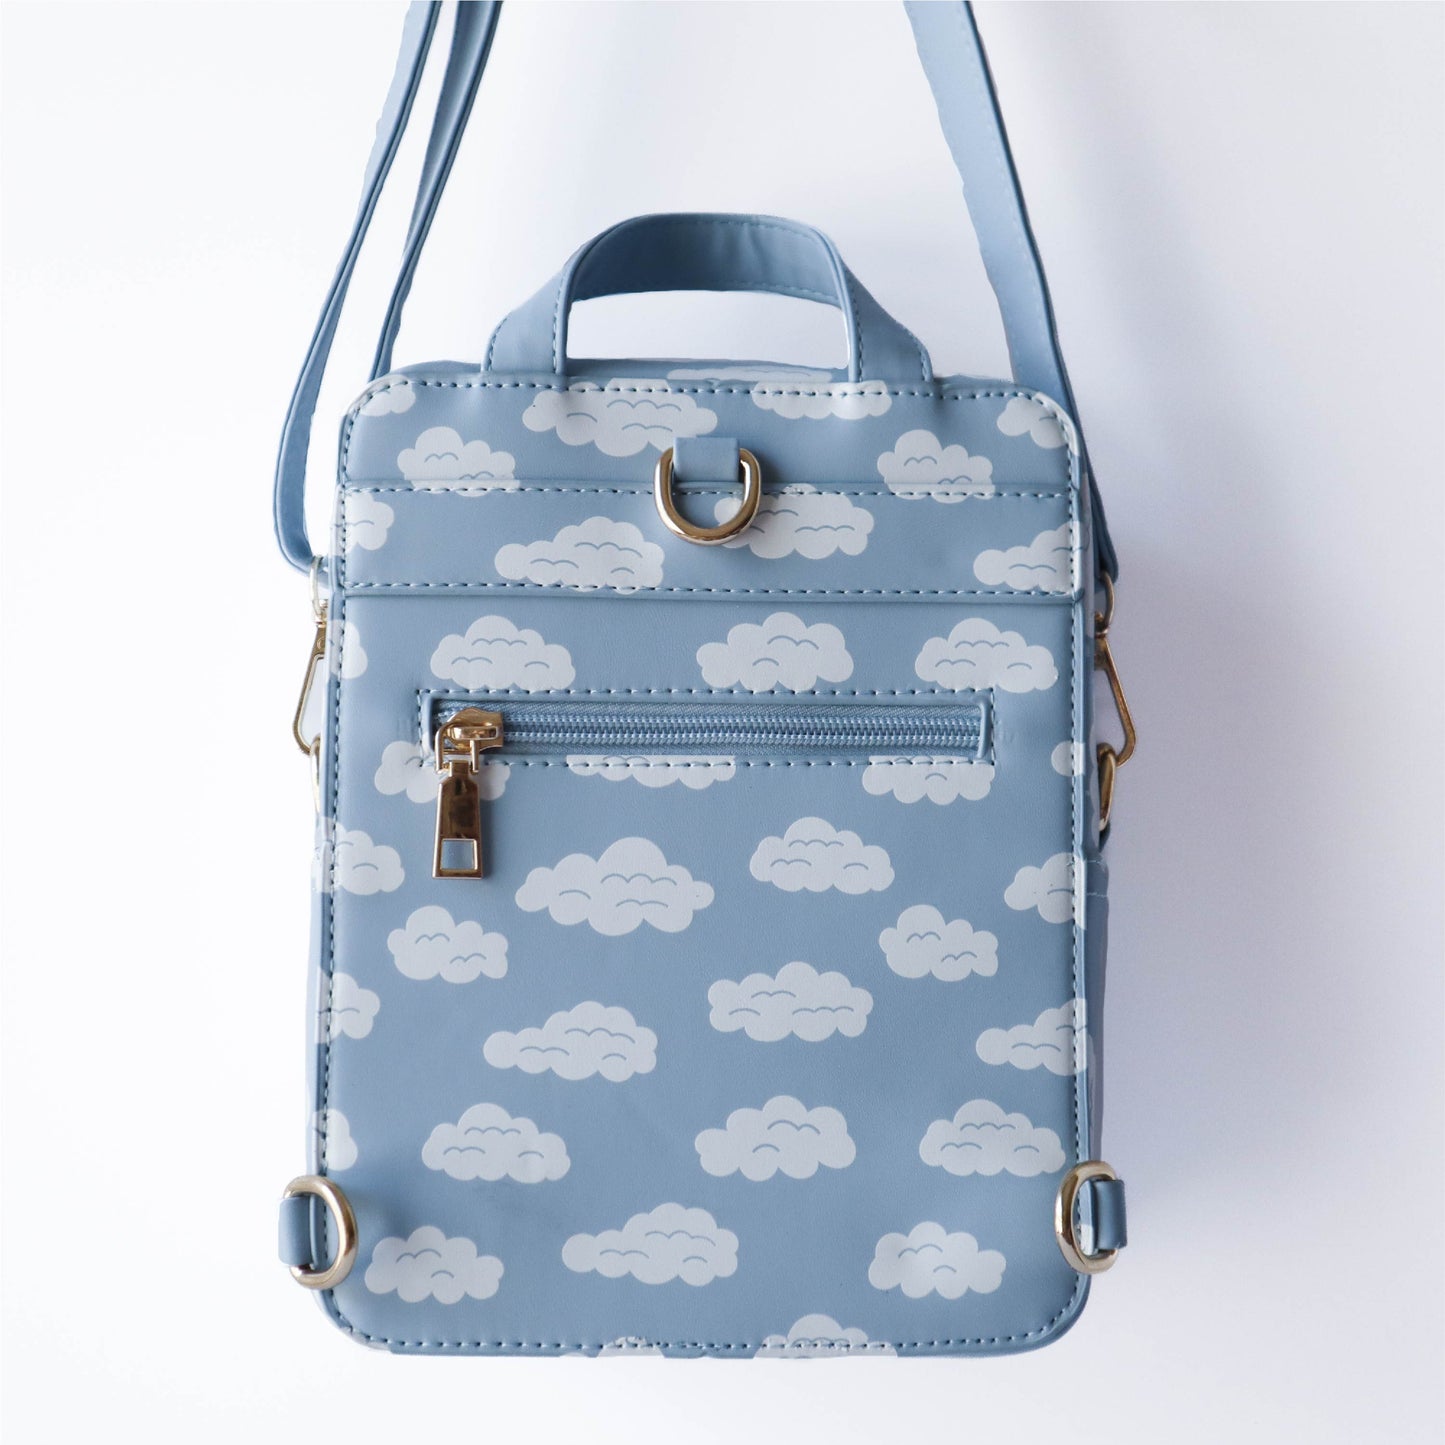 Overcast Skies | Window Cover Ita Bag